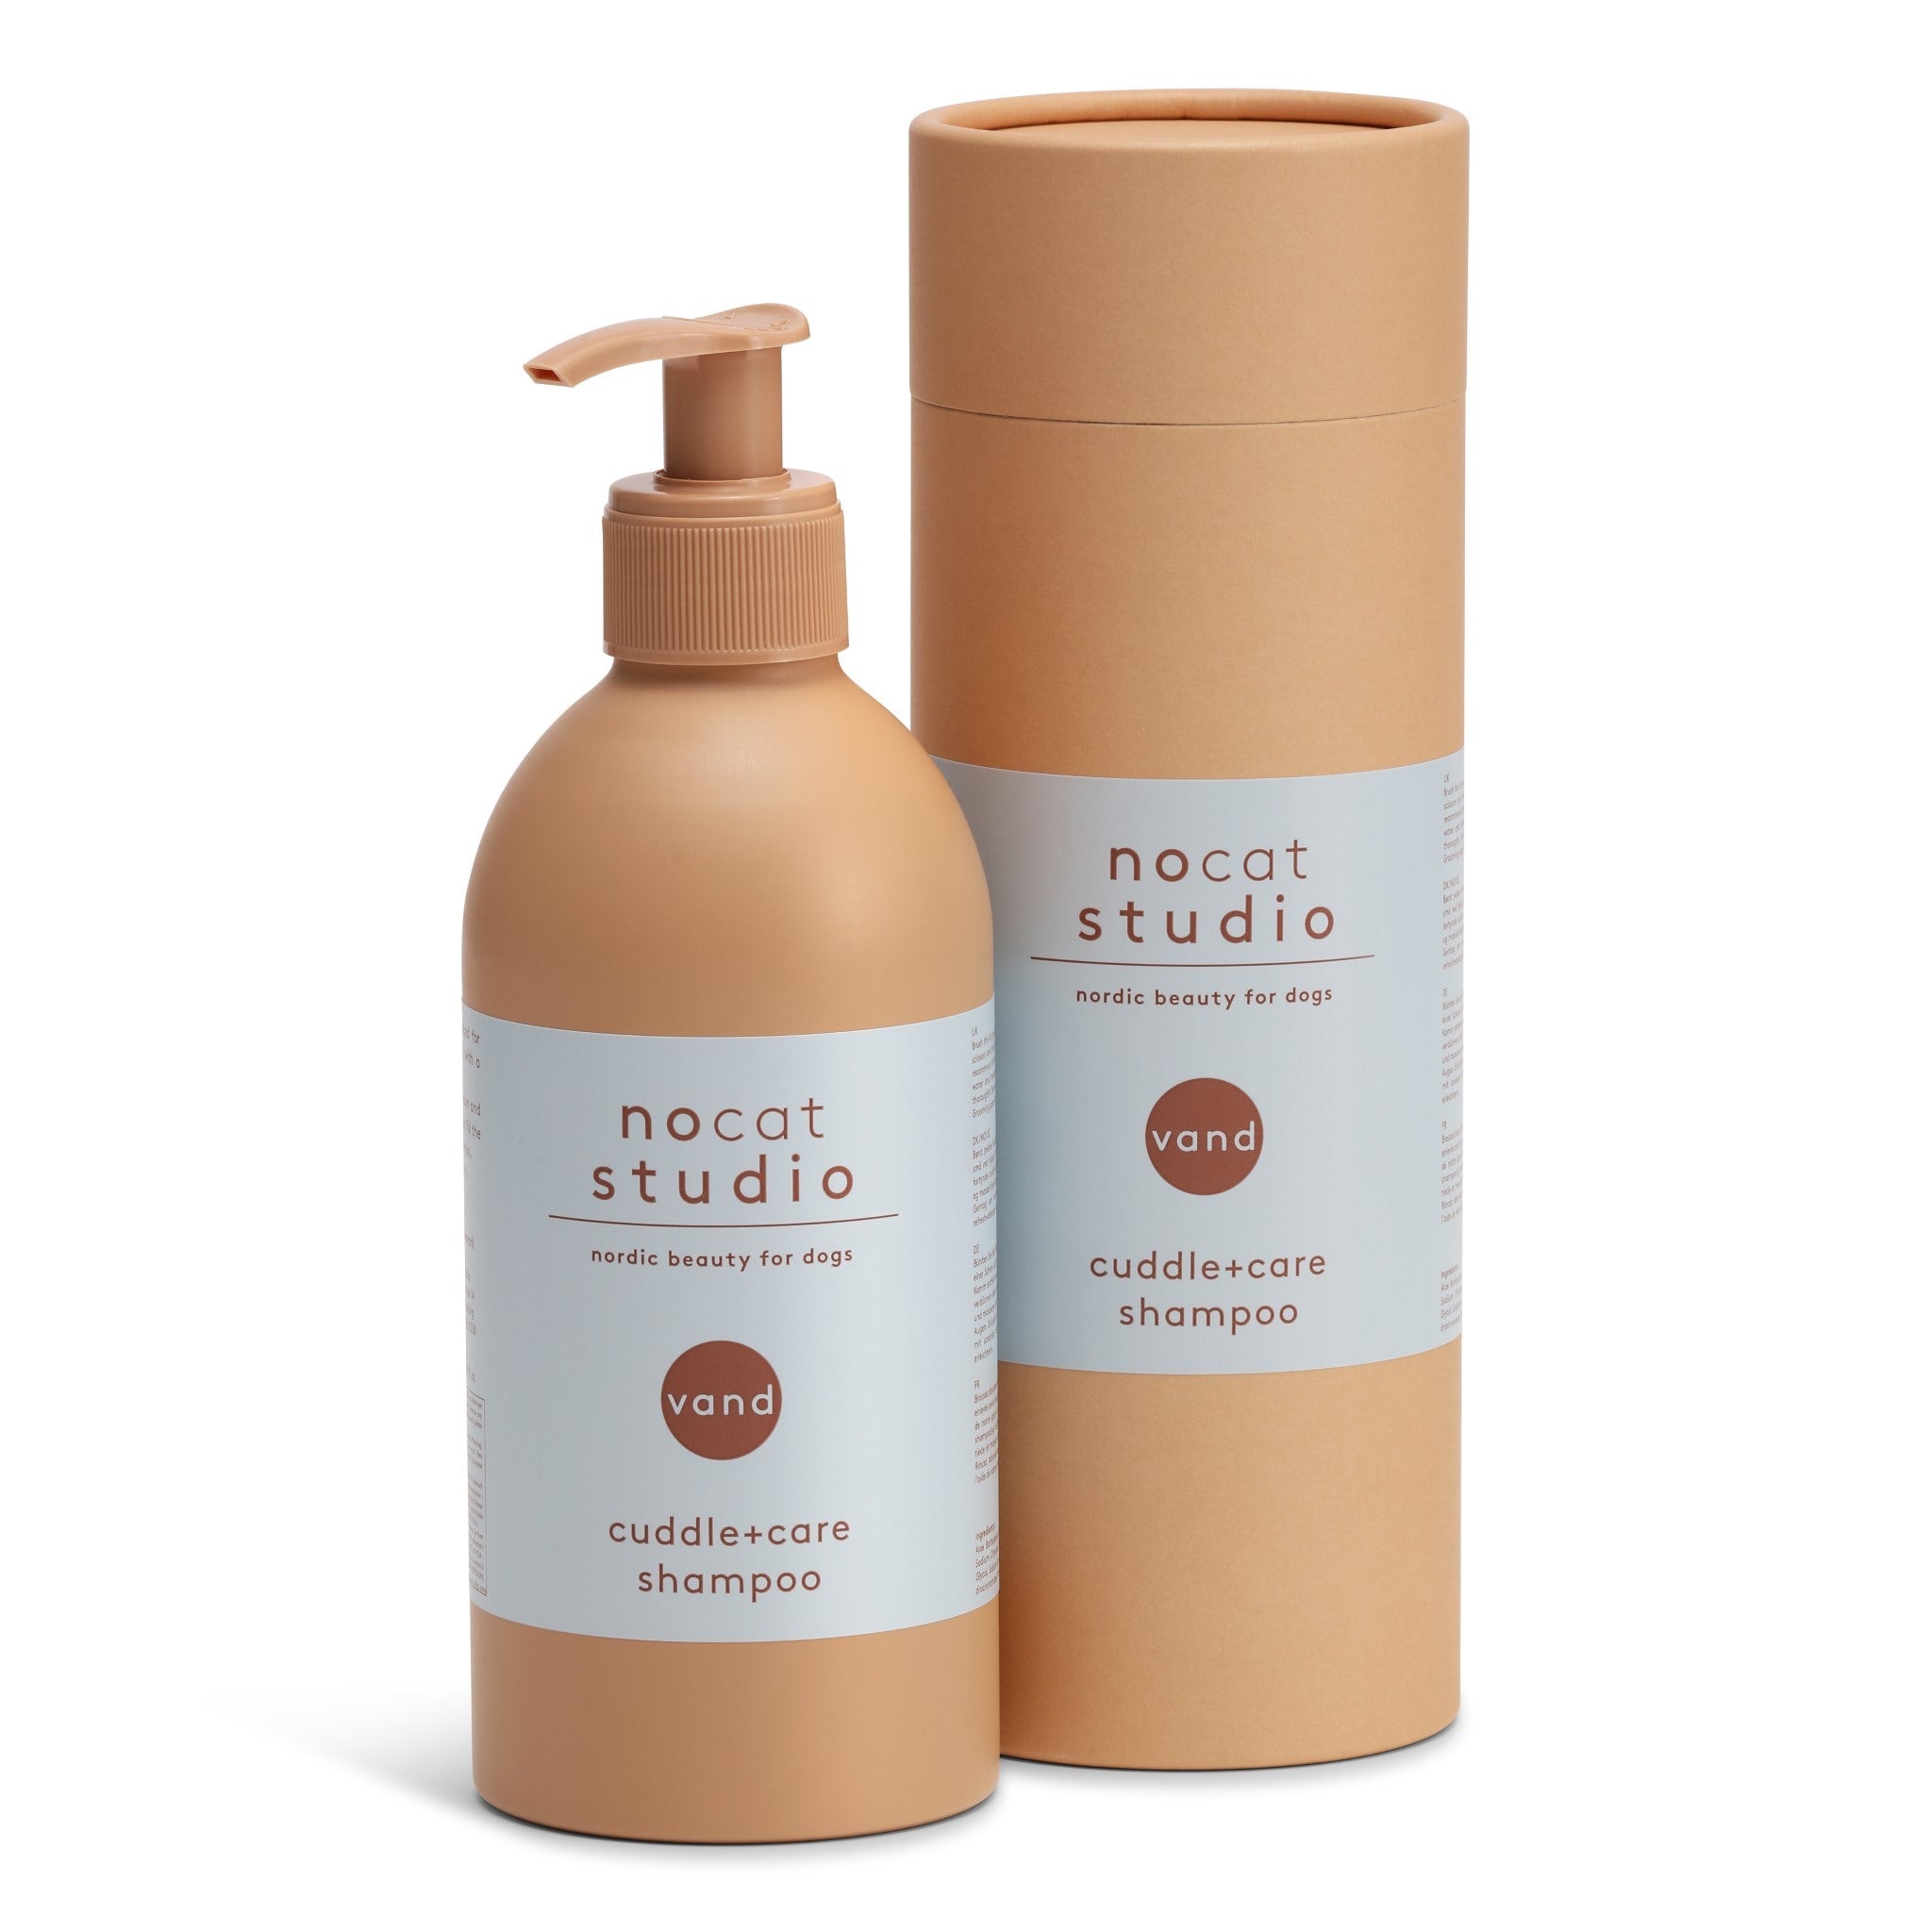 PCUNO02562S - Cuddle+care shampoo - VAND - 375 ml - Muotitassu